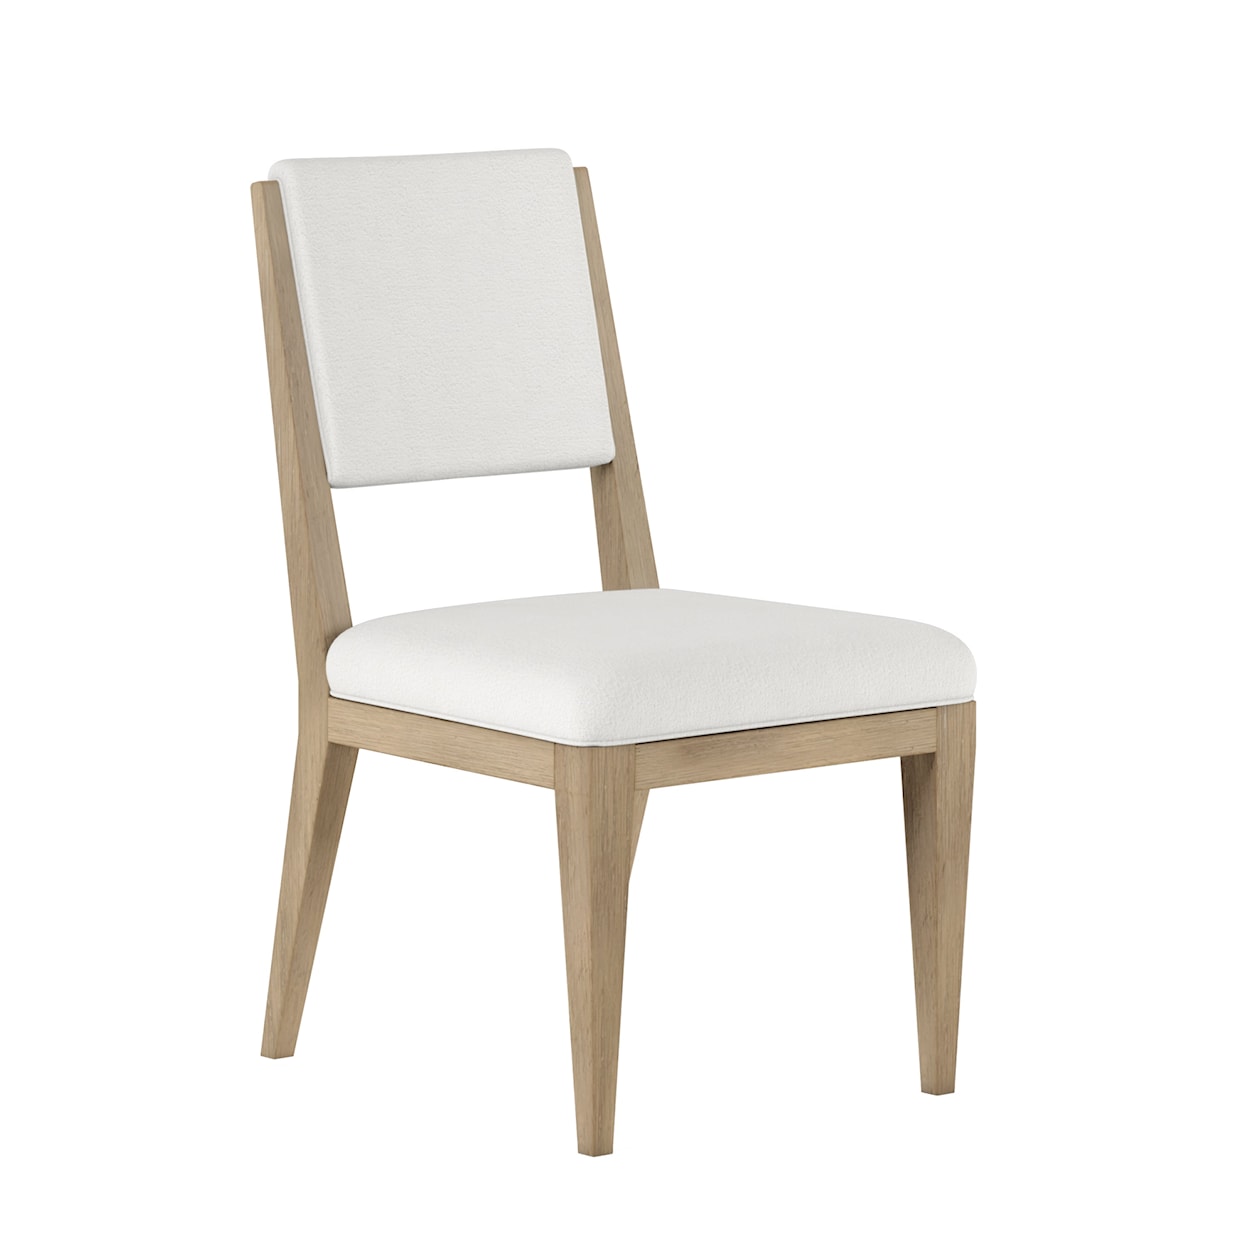 A.R.T. Furniture Inc 322 - Garrison Dining Side Chair